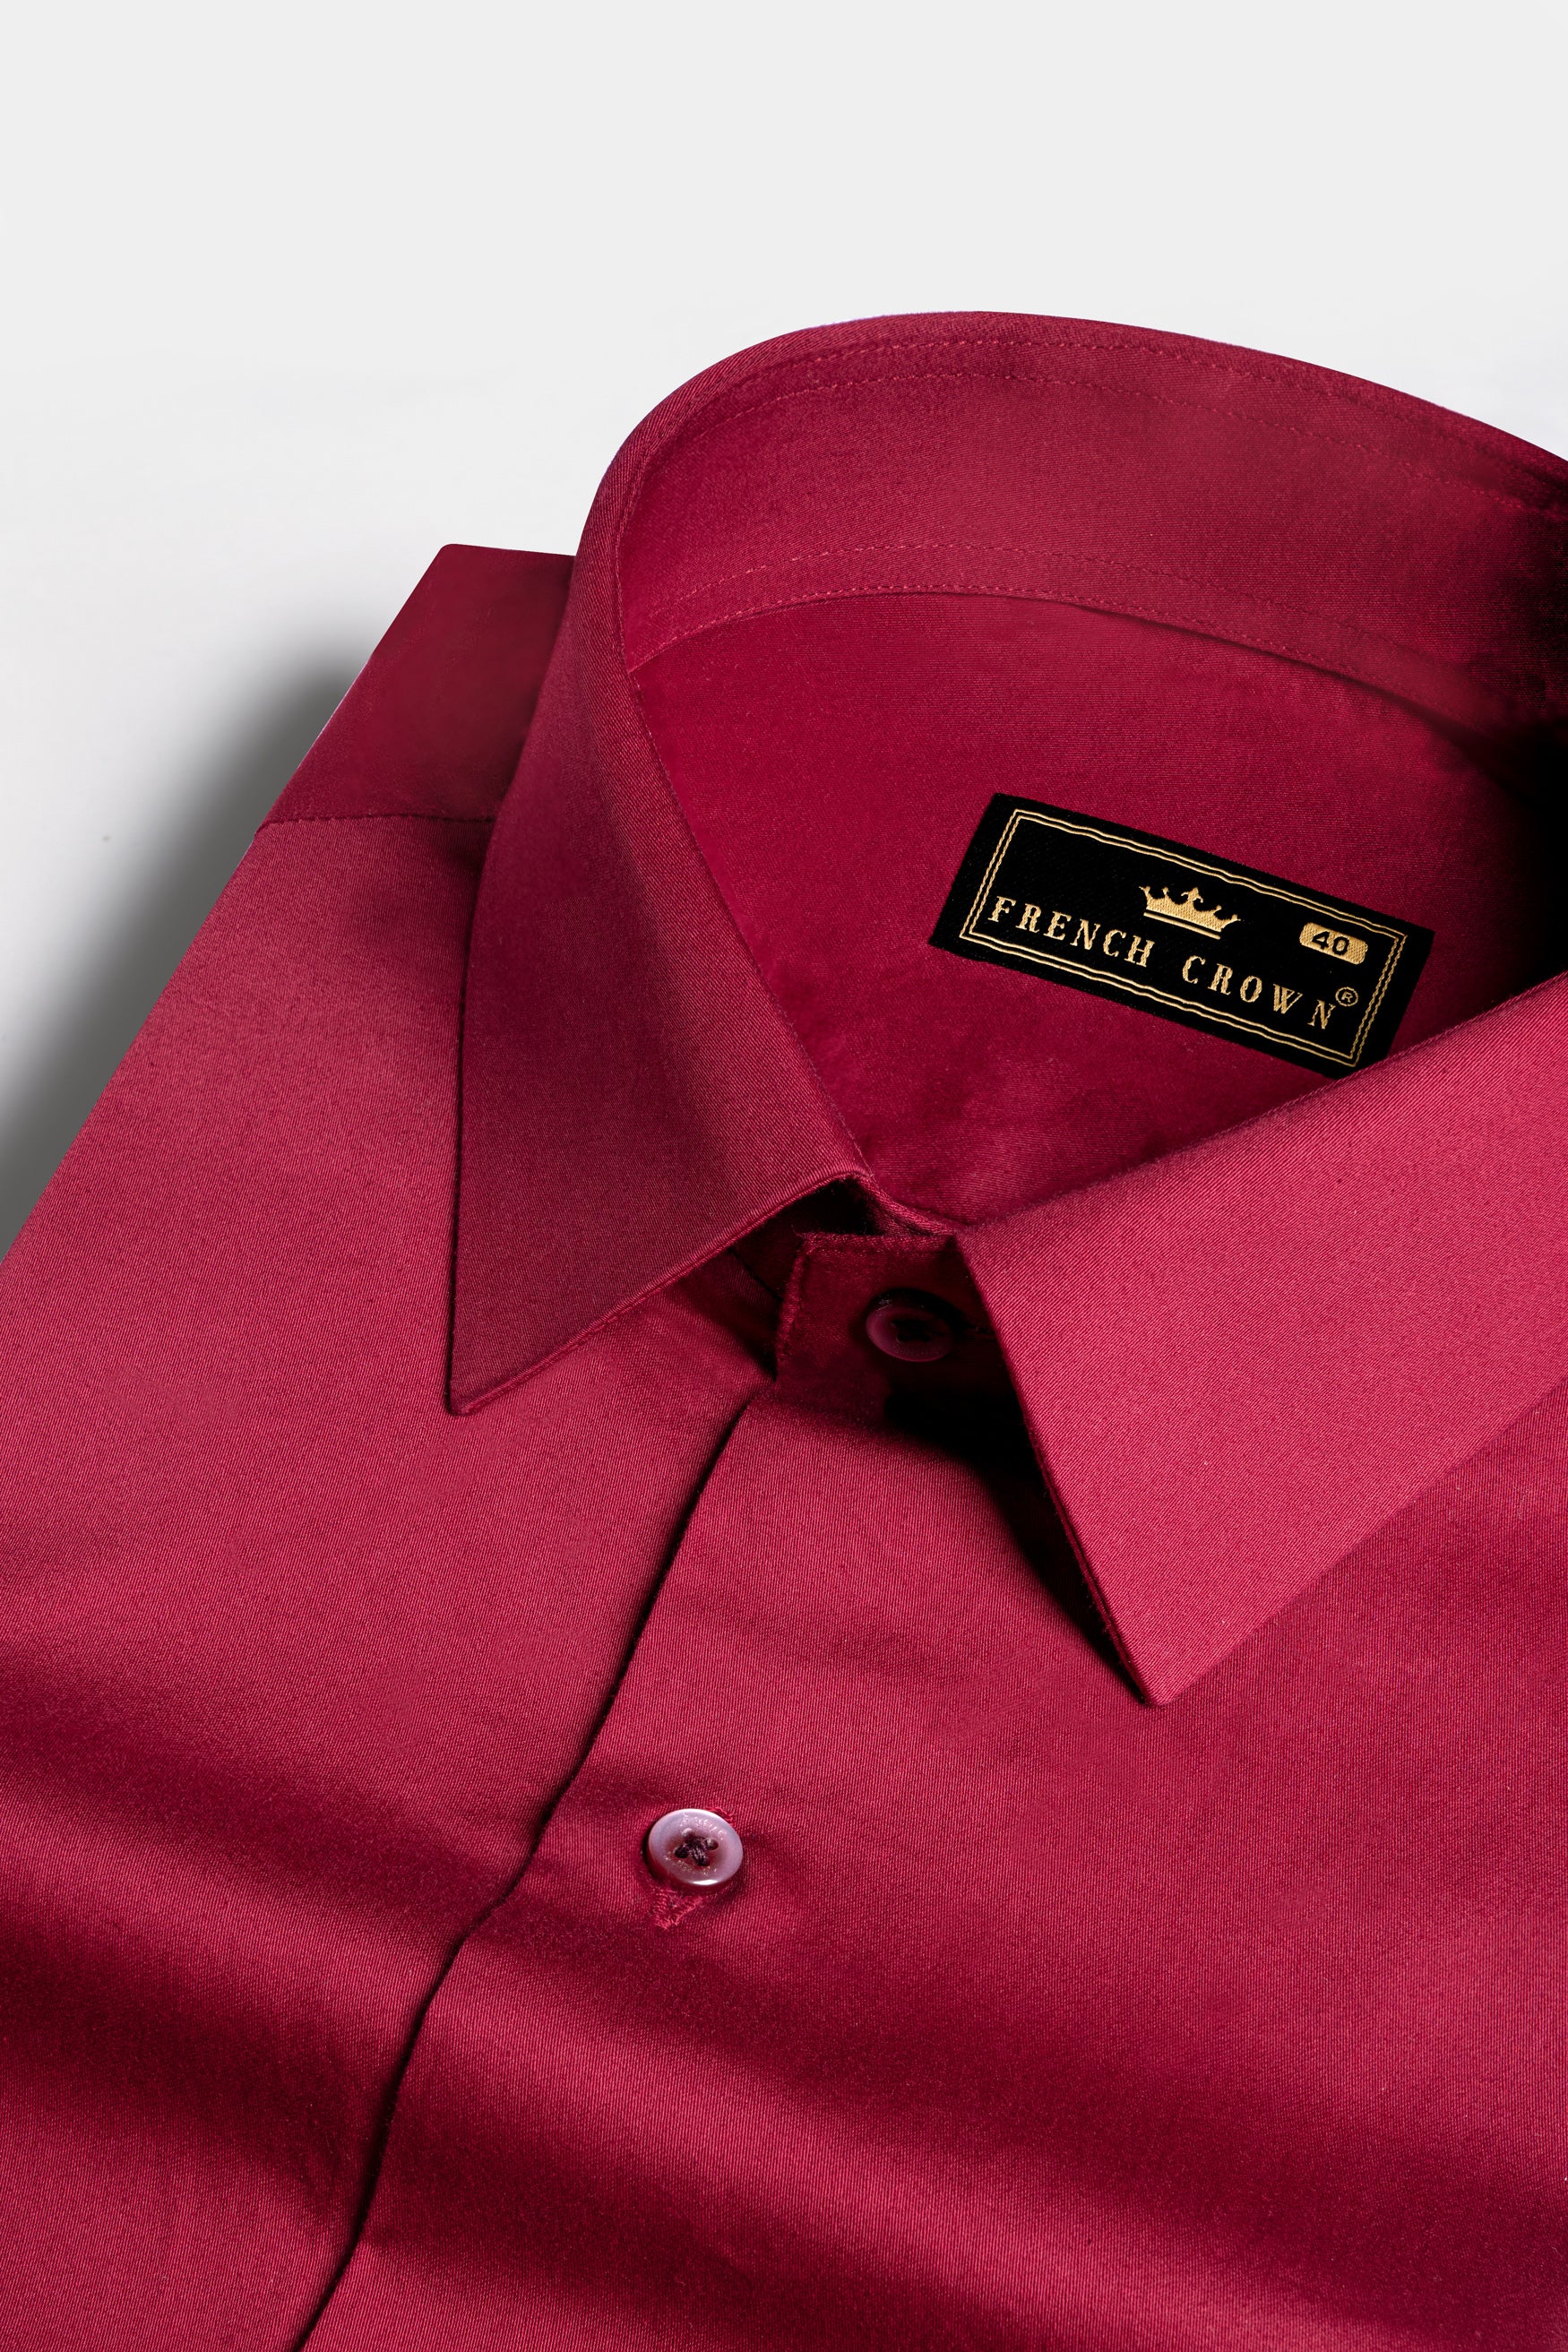 Claret Red Lord Krishna Embroidered Subtle Sheen Super Soft Premium Cotton Designer Shirt